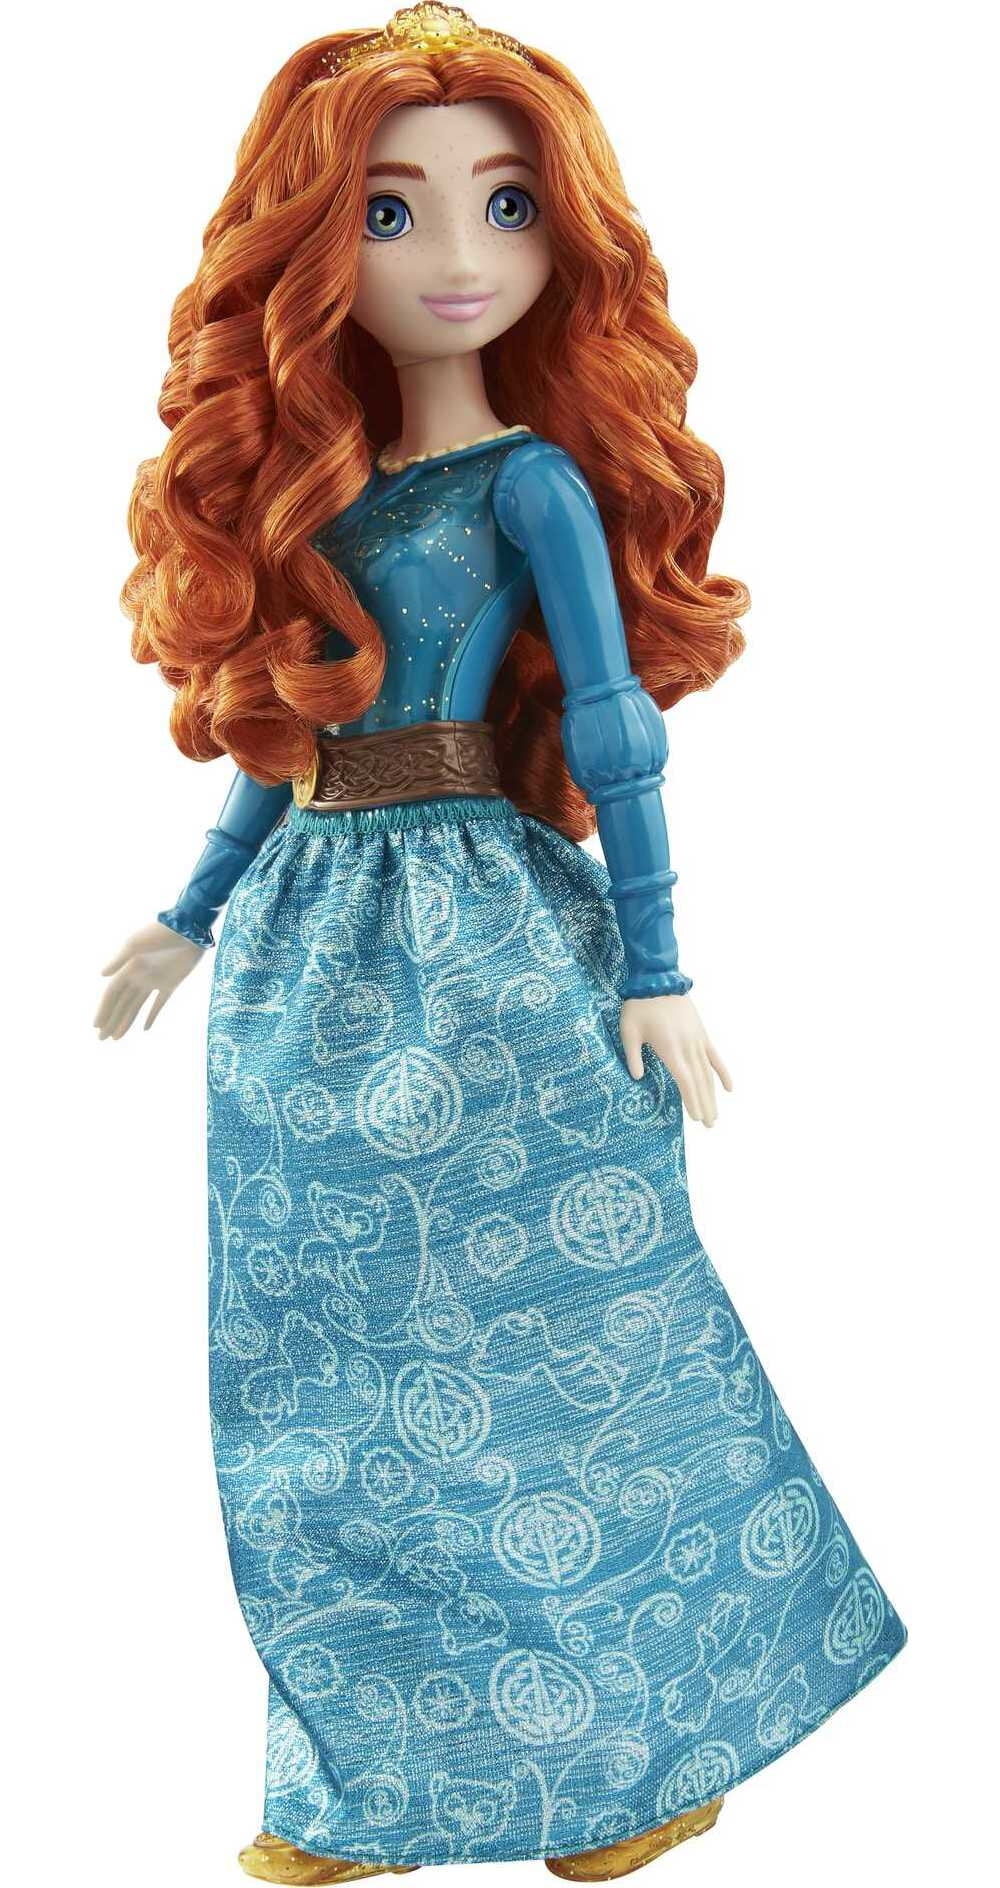 Disney Princess Merida Fashion Doll with Red Hair, Blue & Accessory, Sparkling Walmart.com